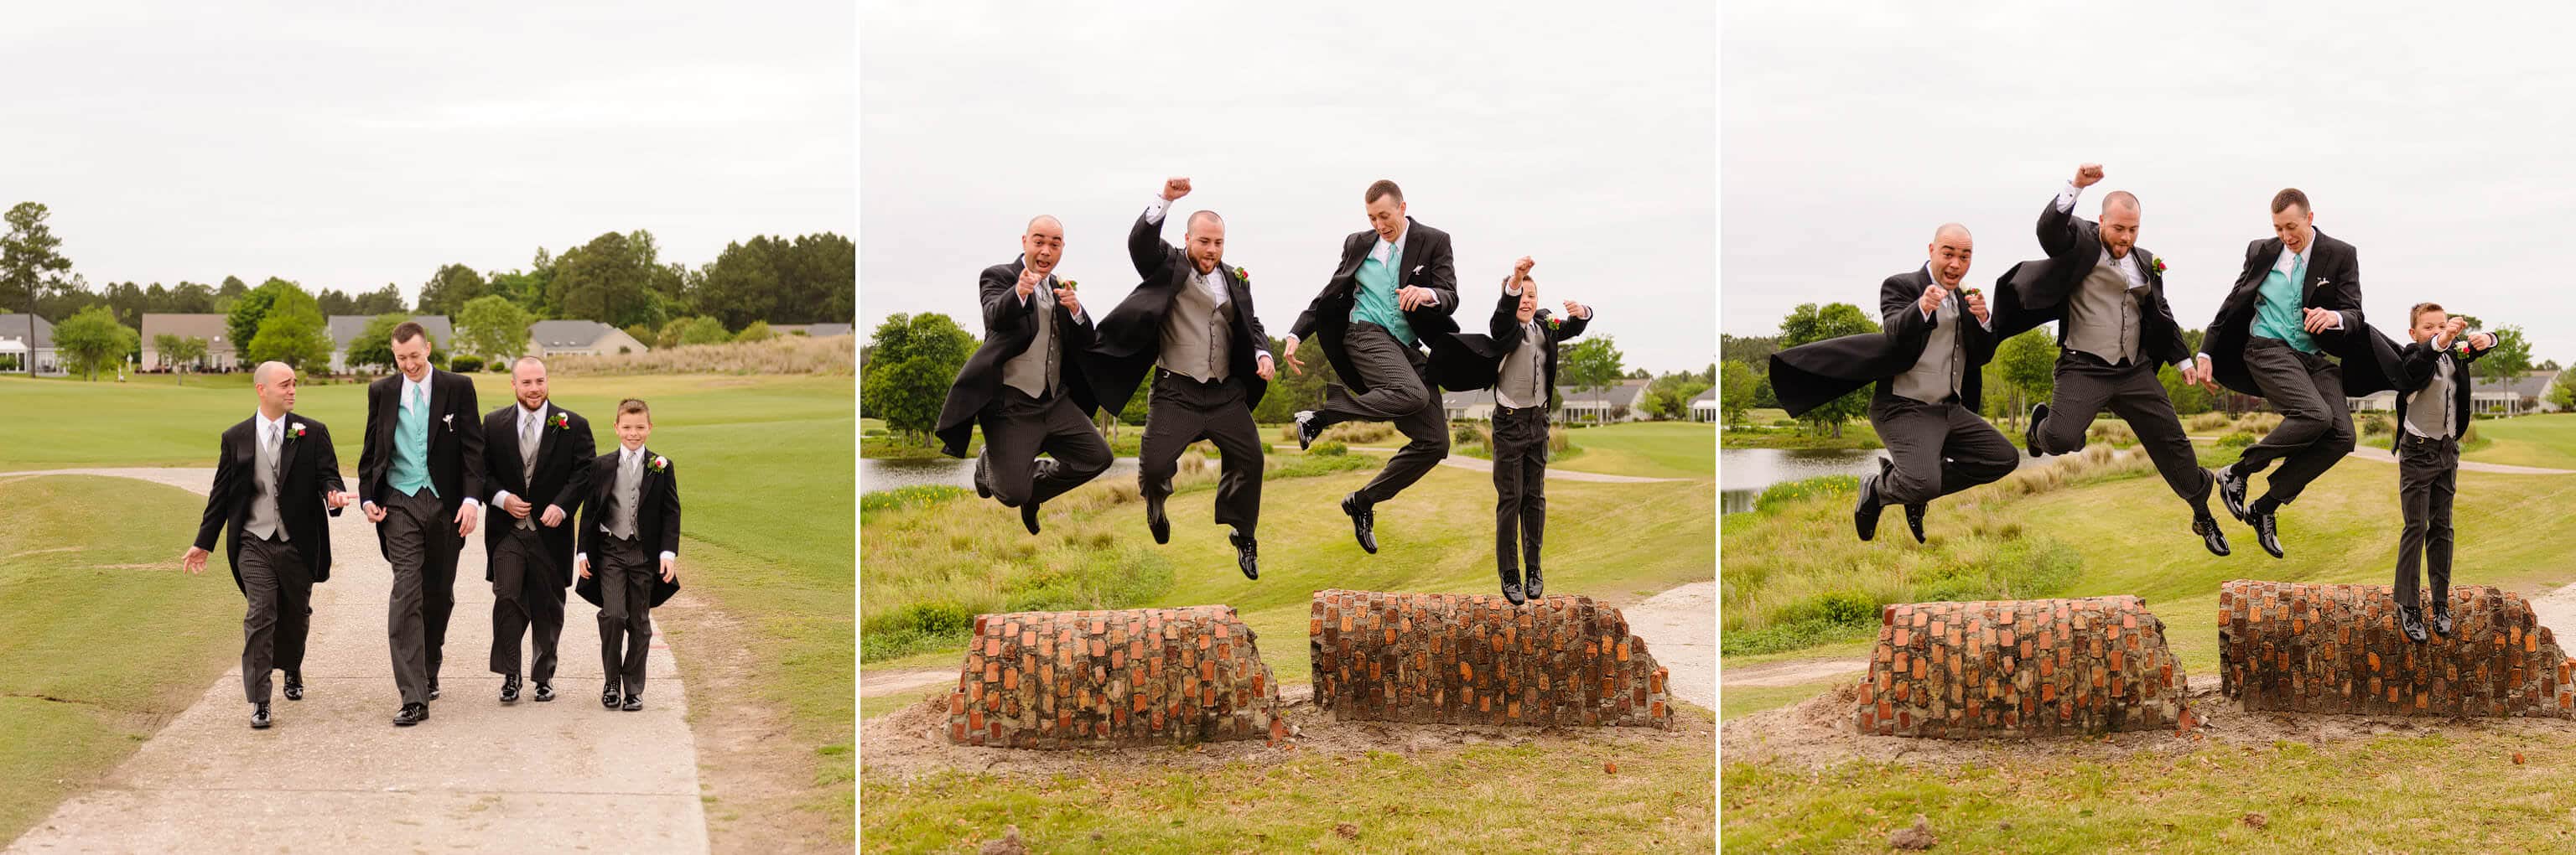 Fun series of shots of groomsmen jumping